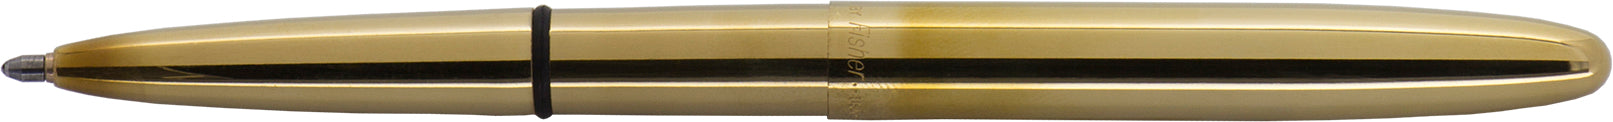 Fisher Space Pen - Raw Brass Bullet